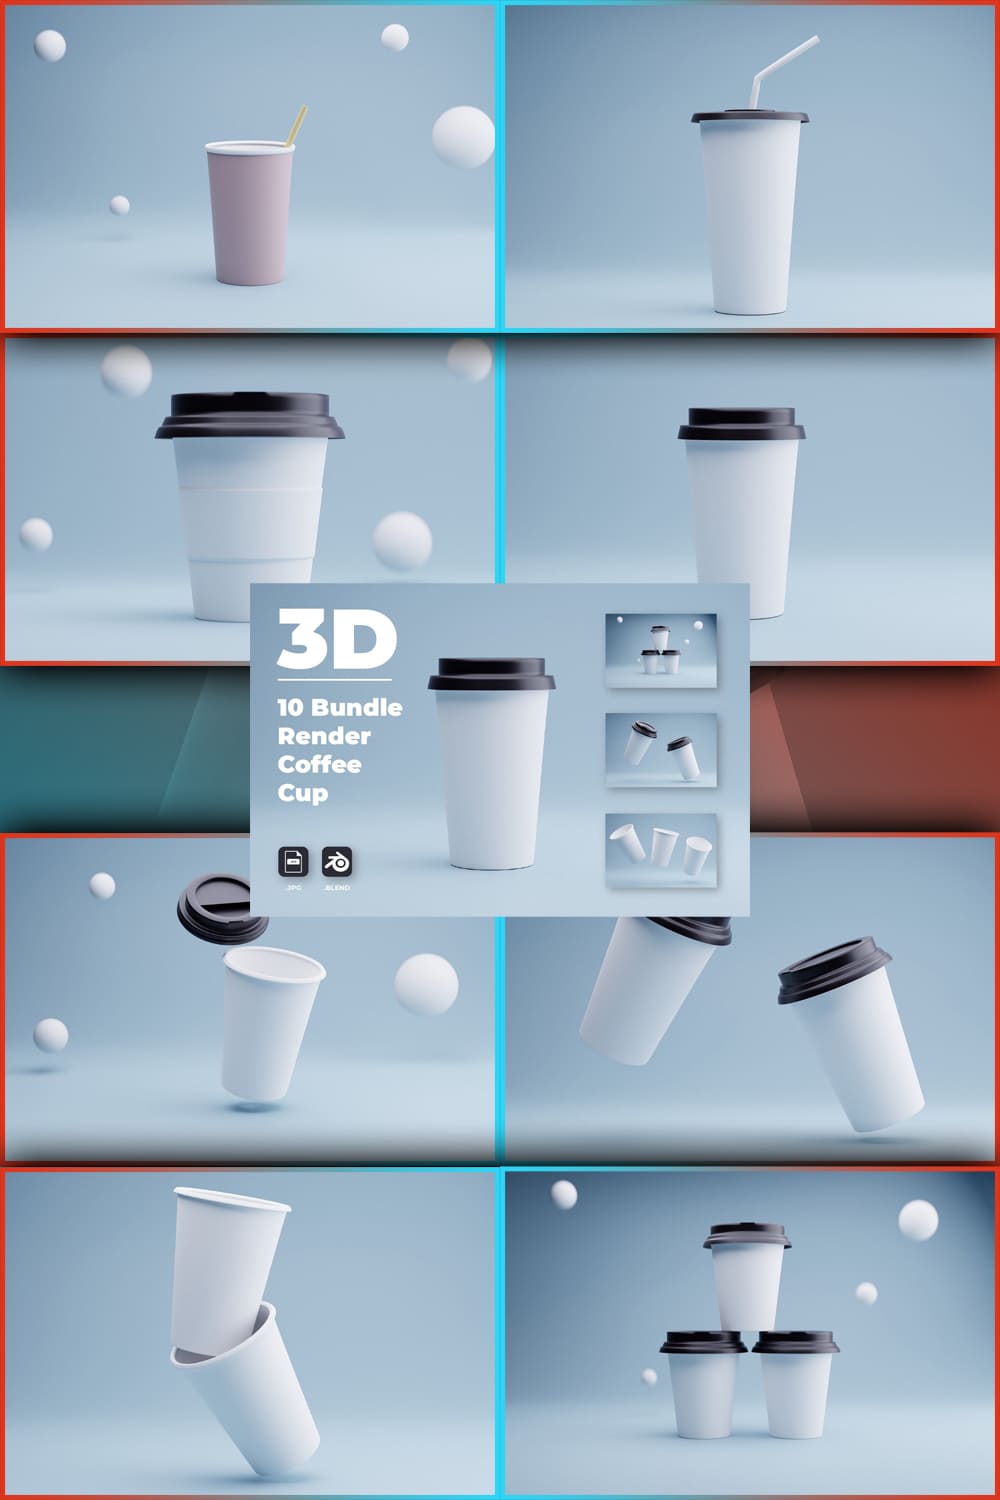 10 Bundle 3D Render Coffee Cup pinterest image preview.